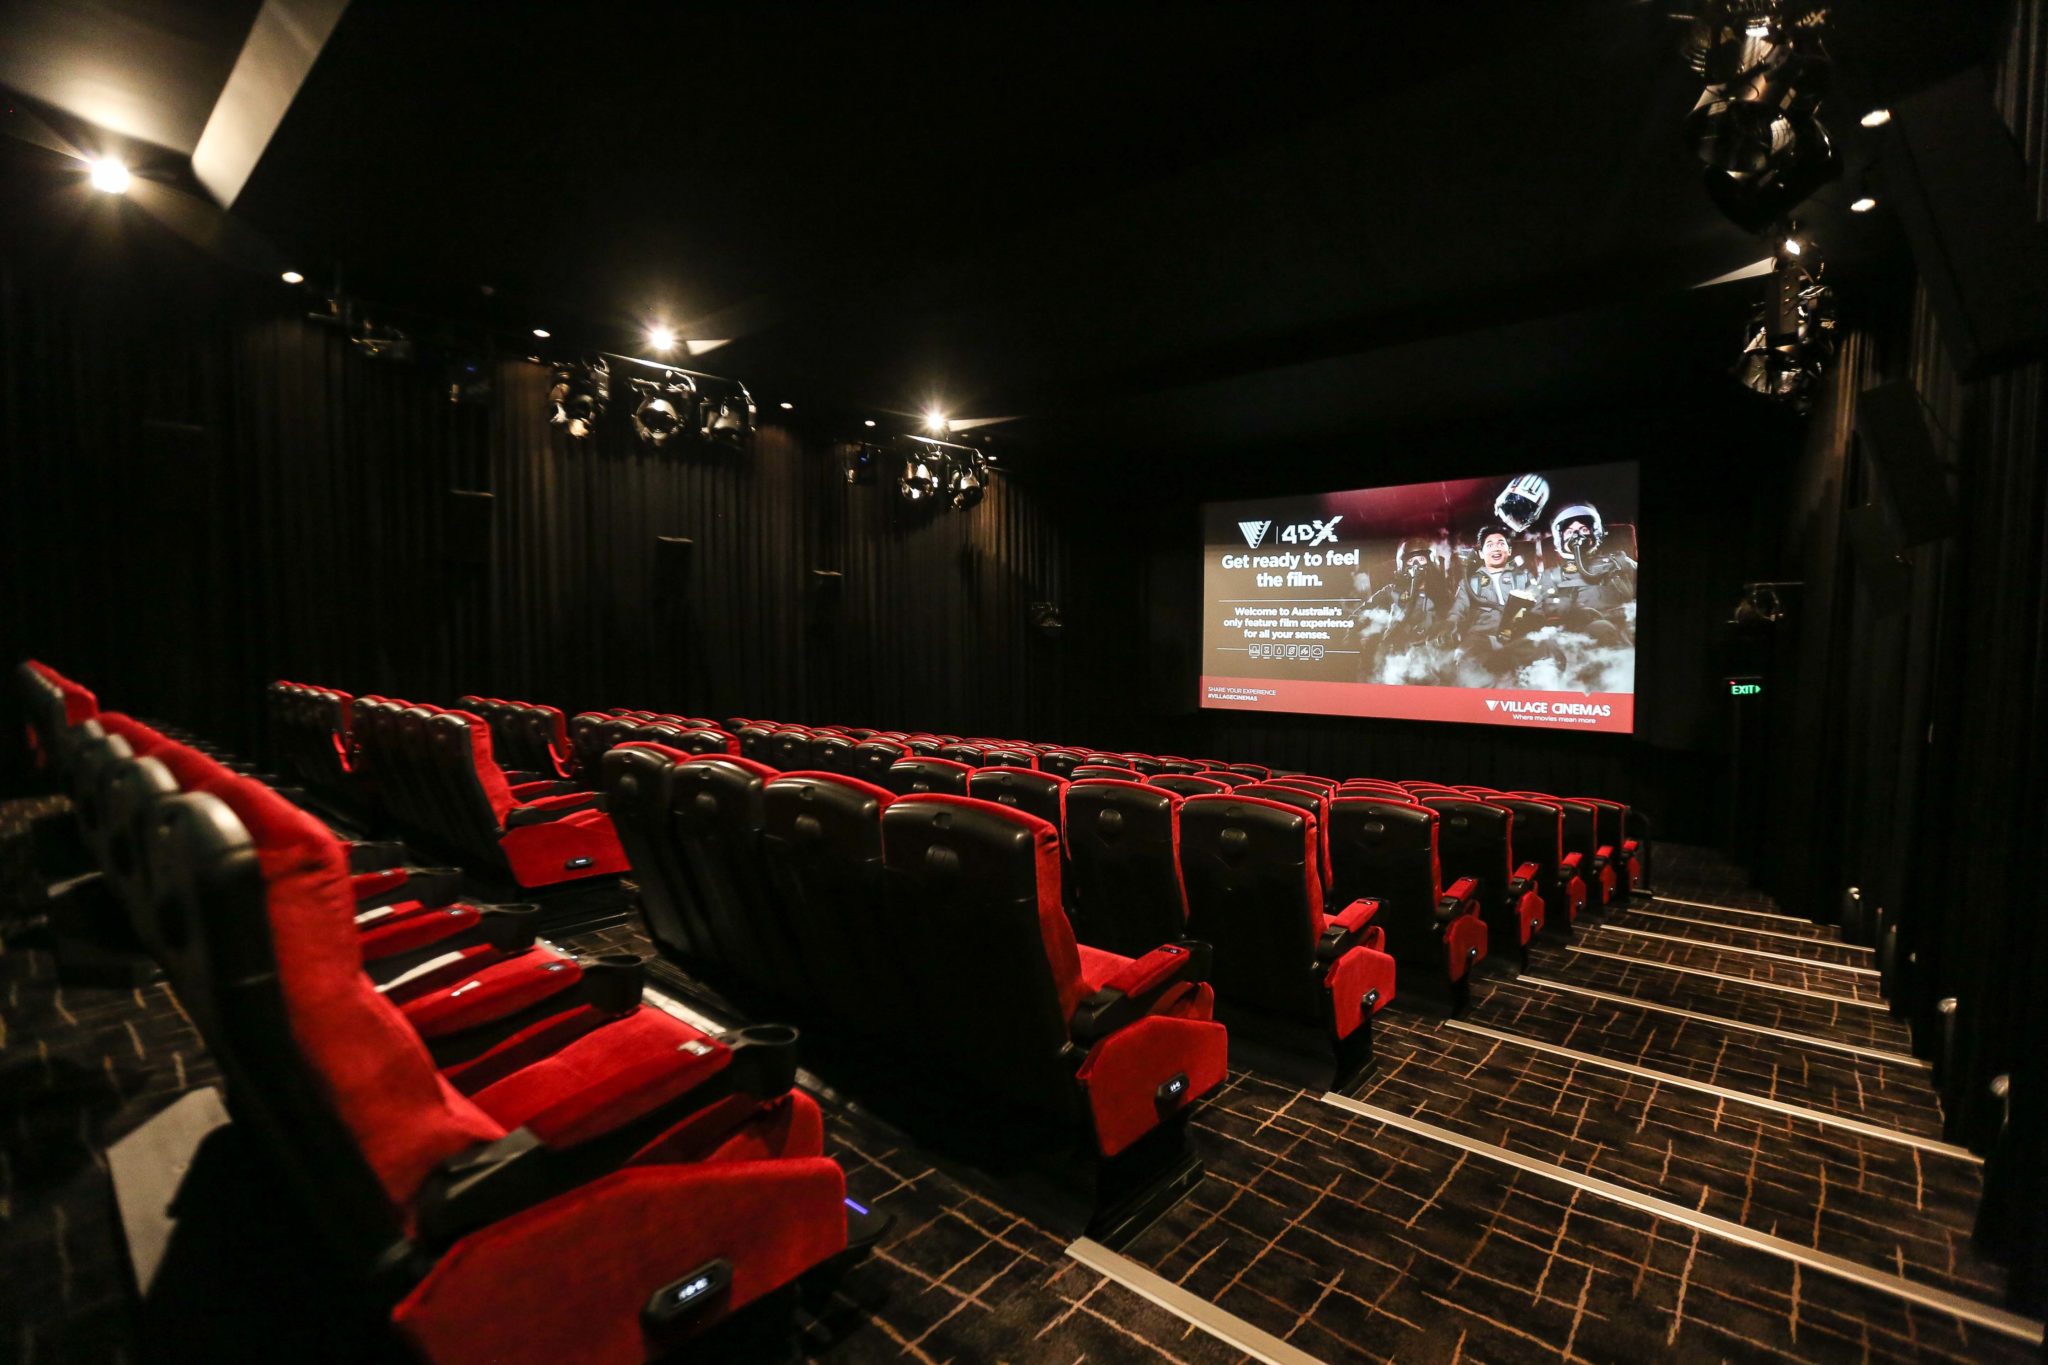 4d movie theater orlando